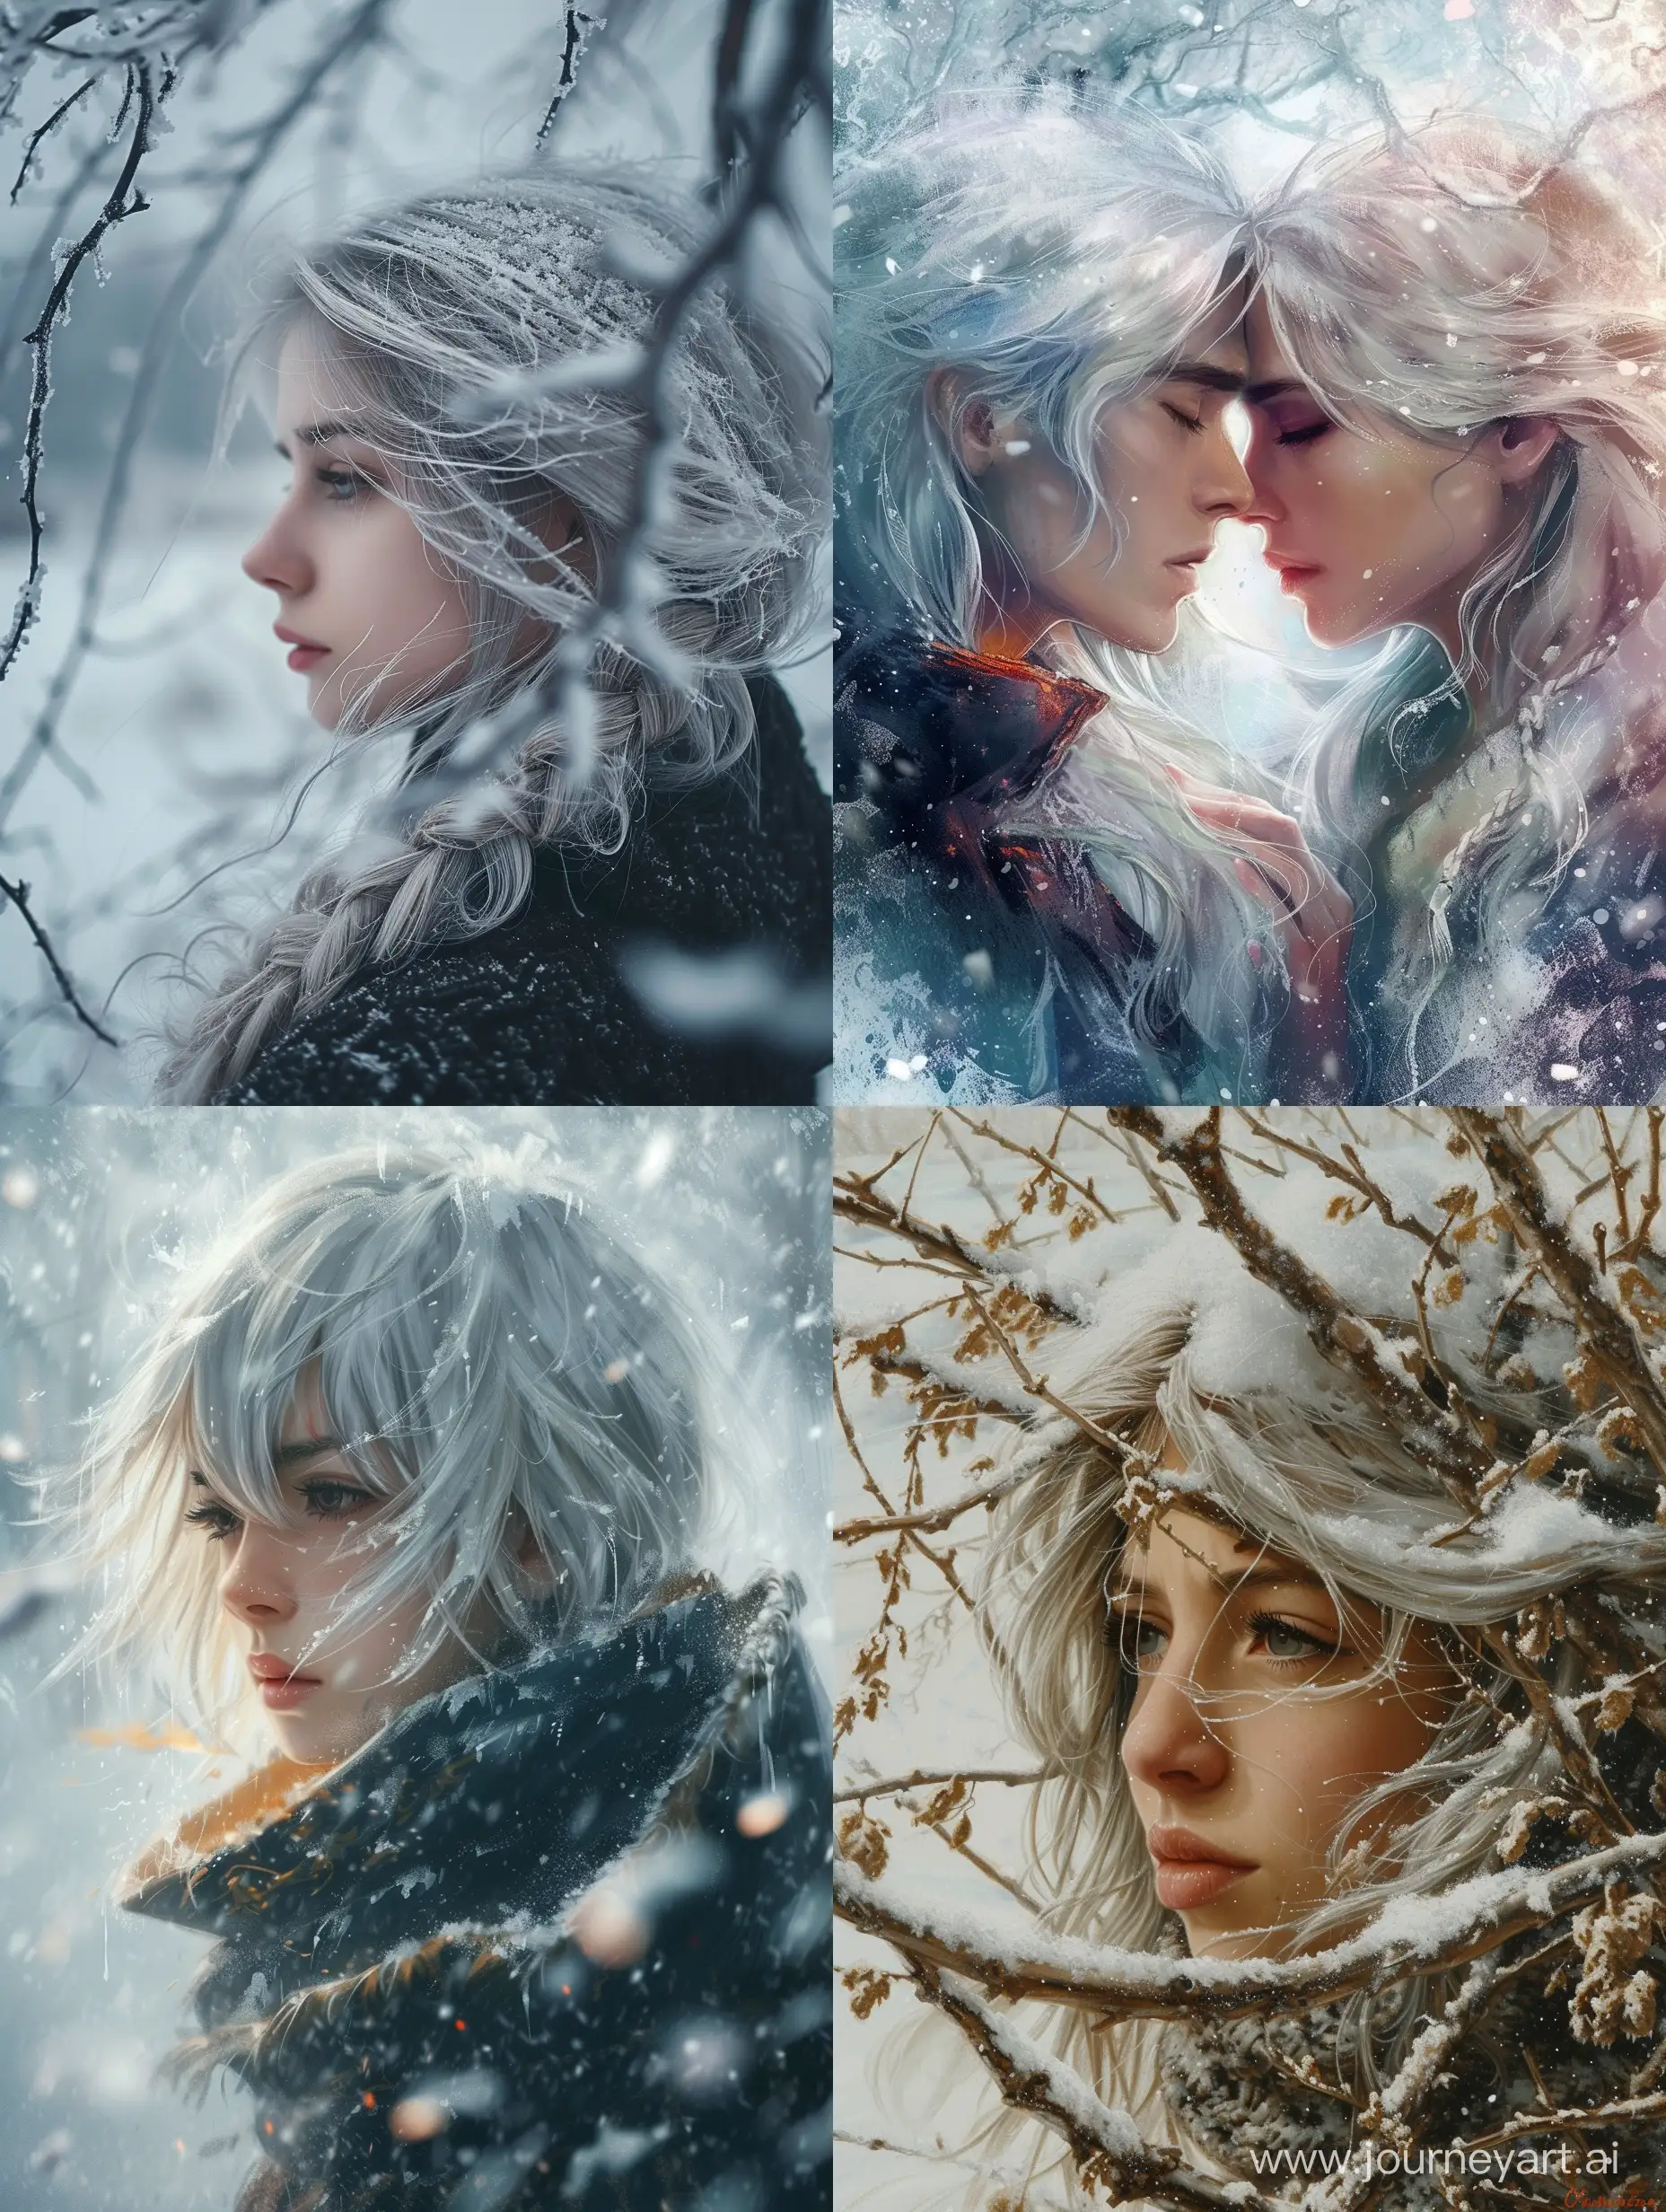 Eternal-Winter-Reflections-Transitioning-Seasons-in-Human-Bonds